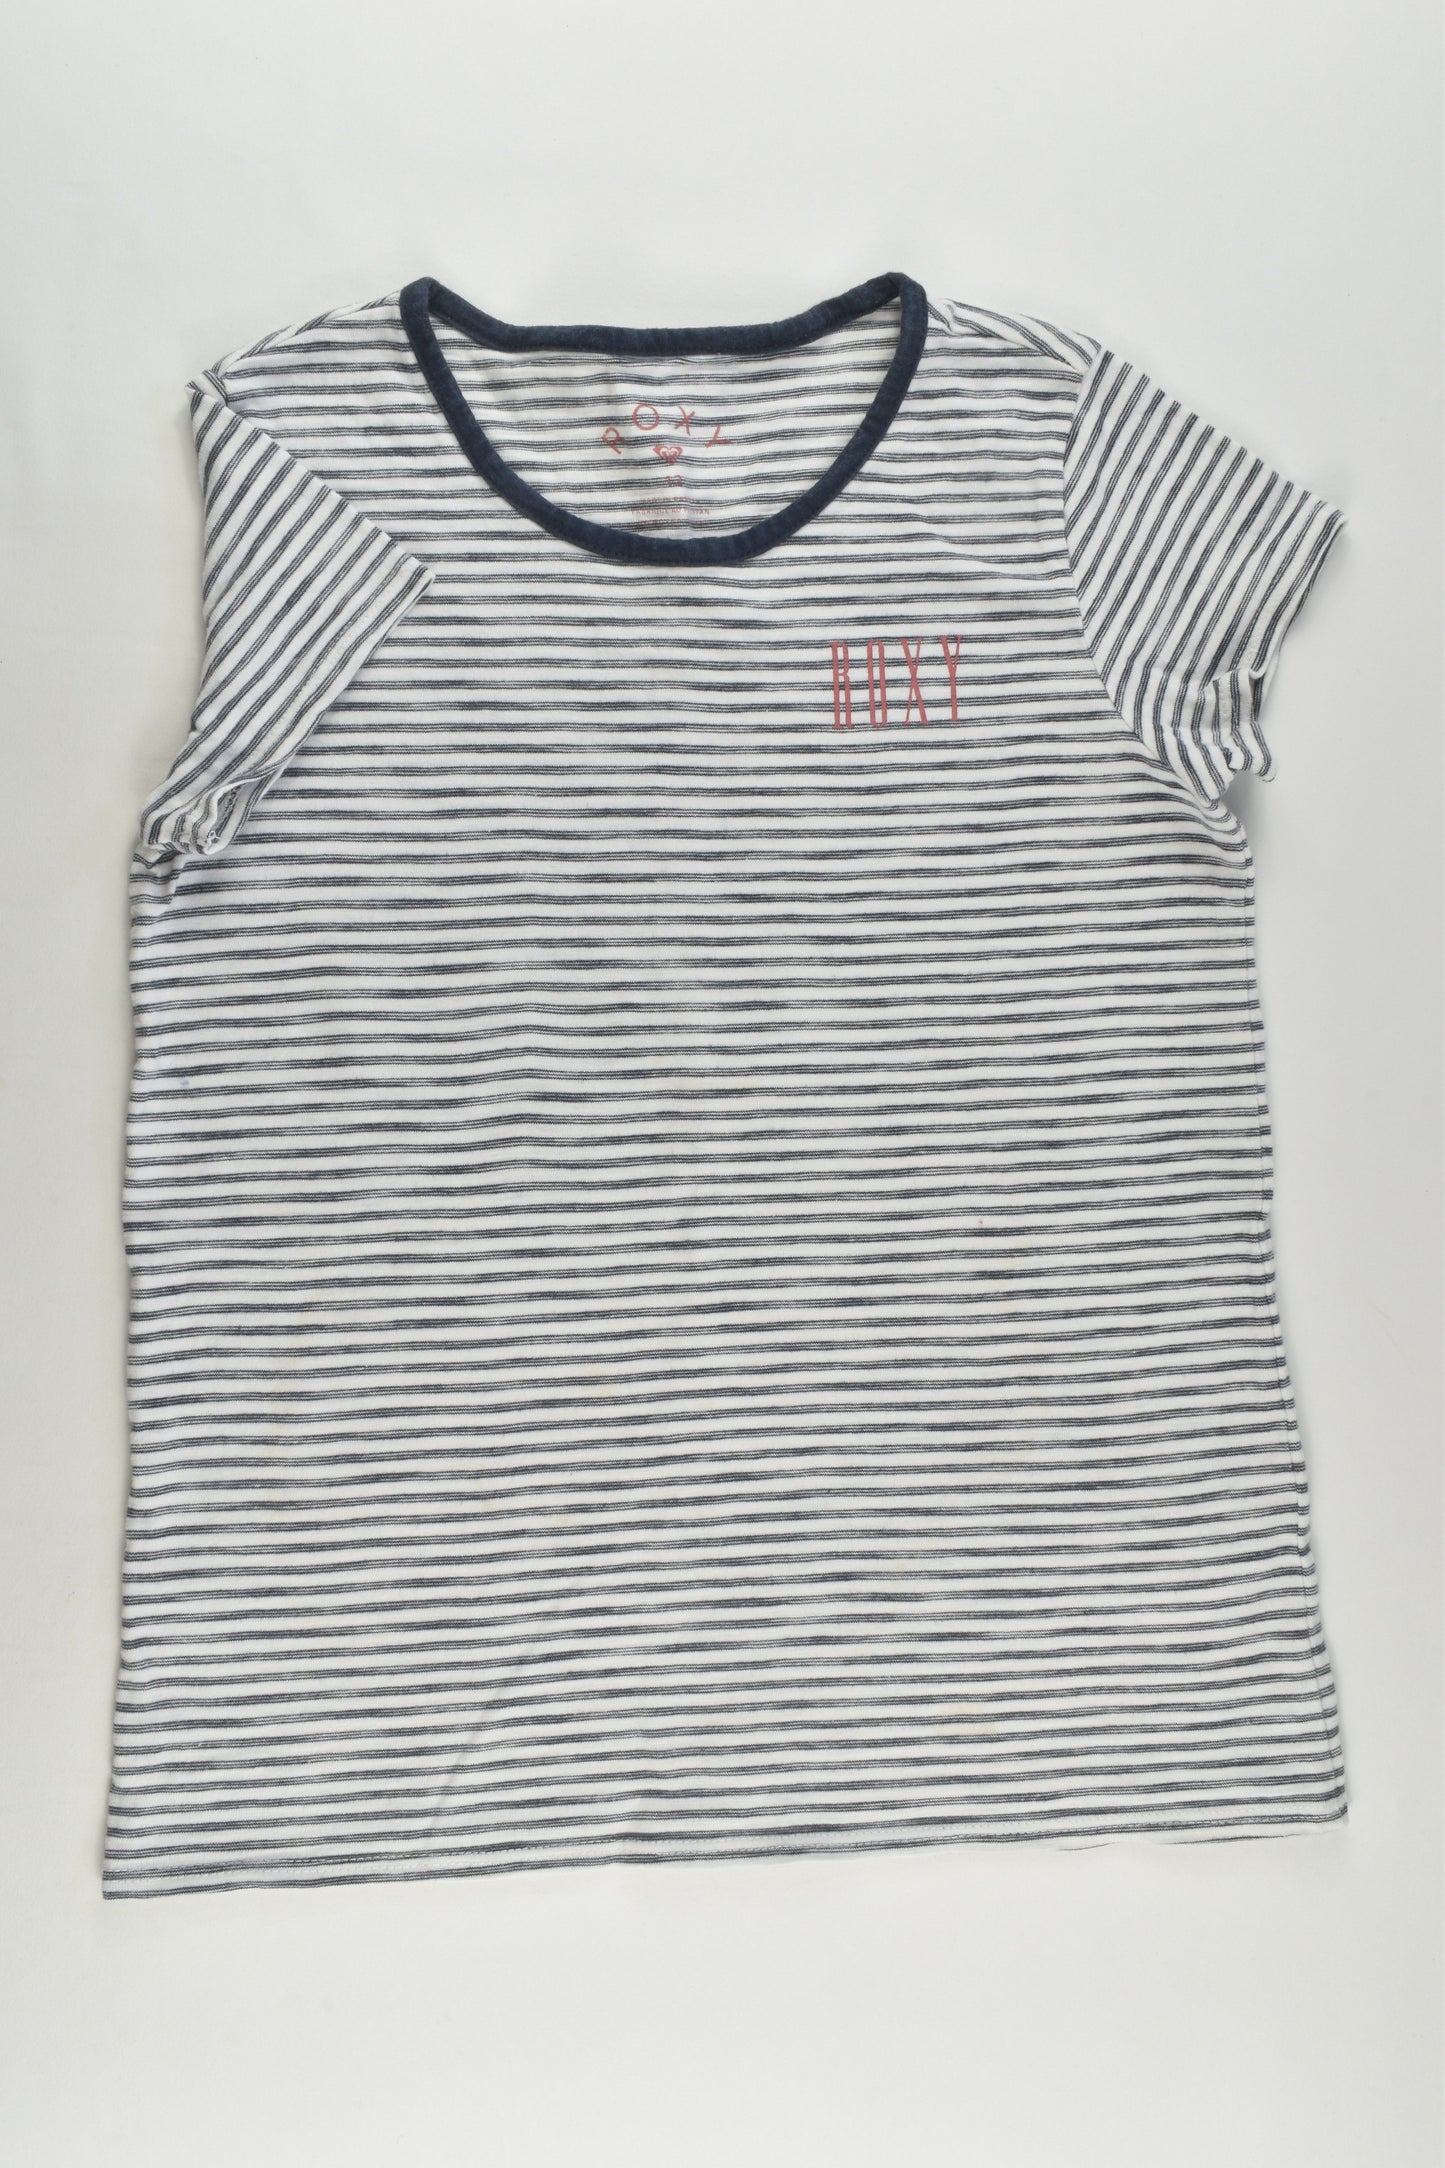 Roxy Size 12 Striped T-shirt